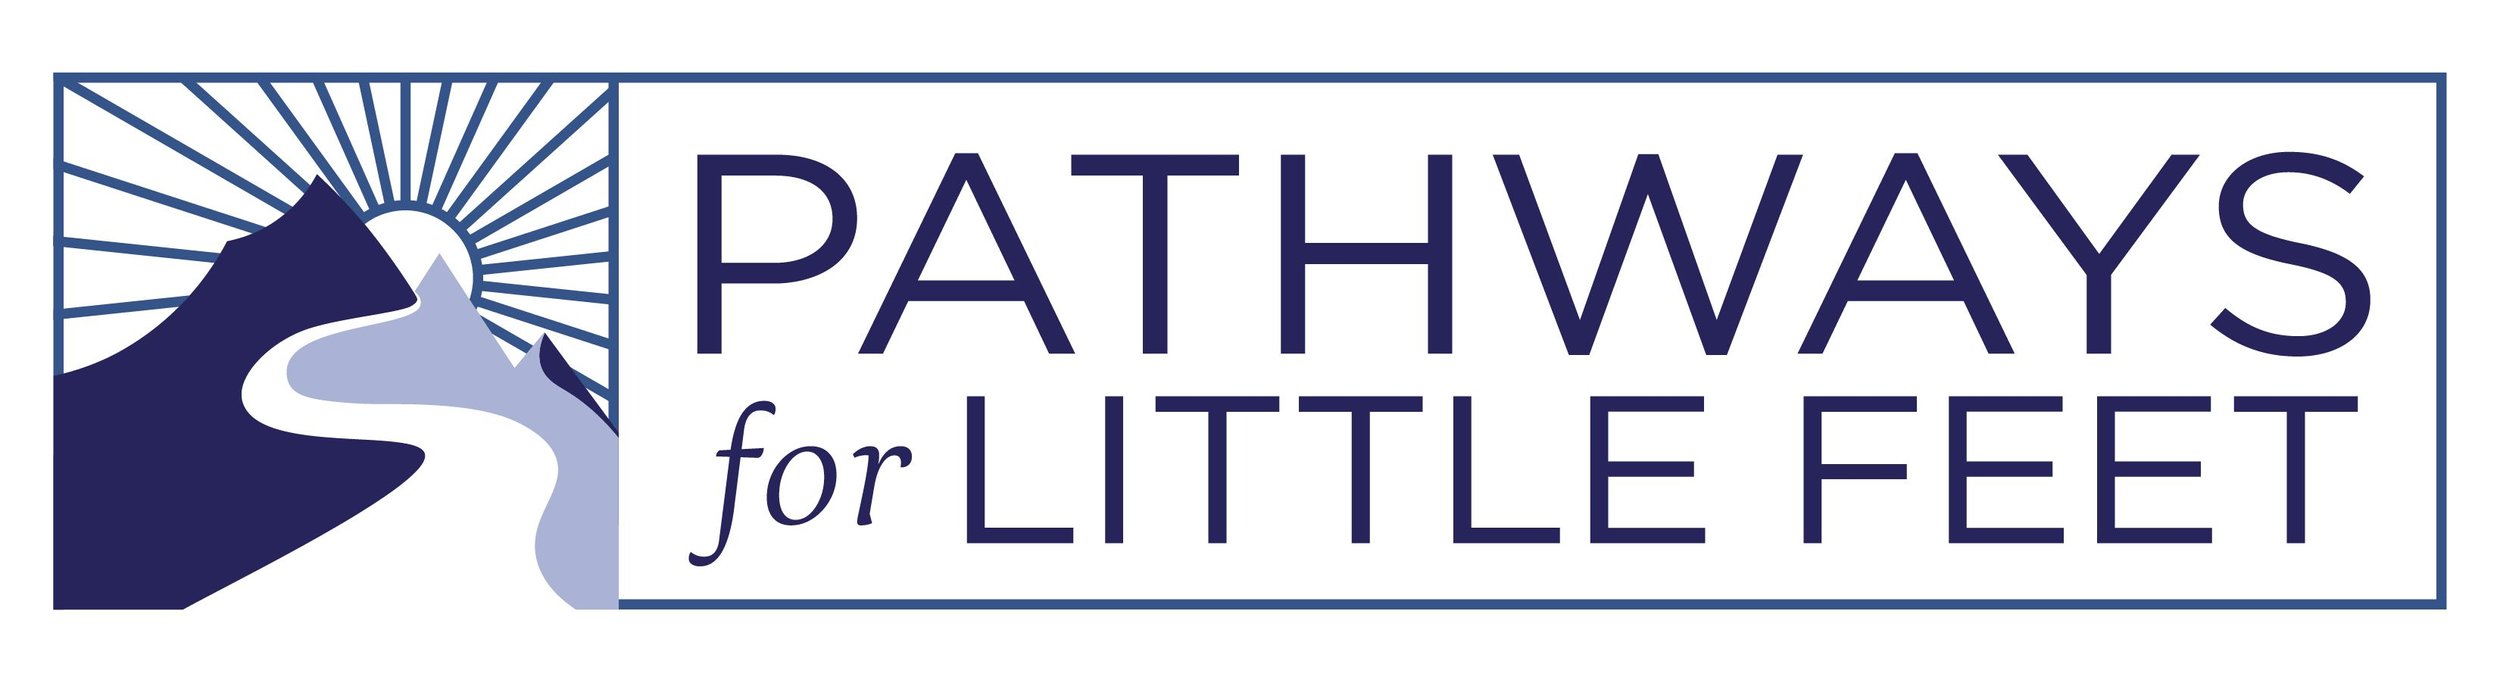 Pathways for Little Feet Logo.jpeg